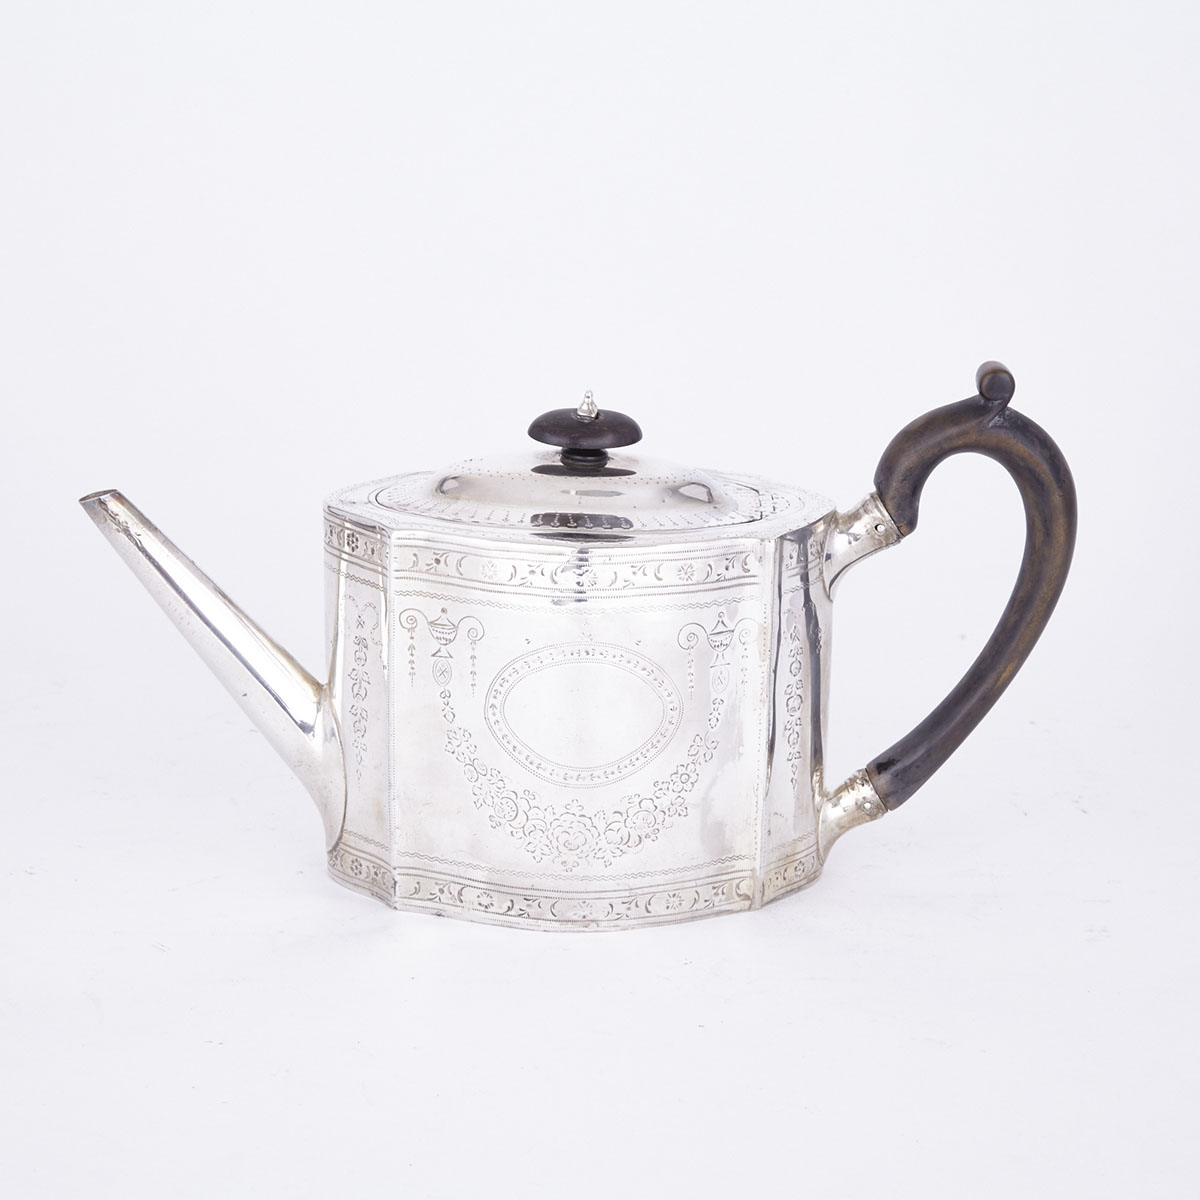 George III Silver Oval Teapot, London, Henry Green,1789